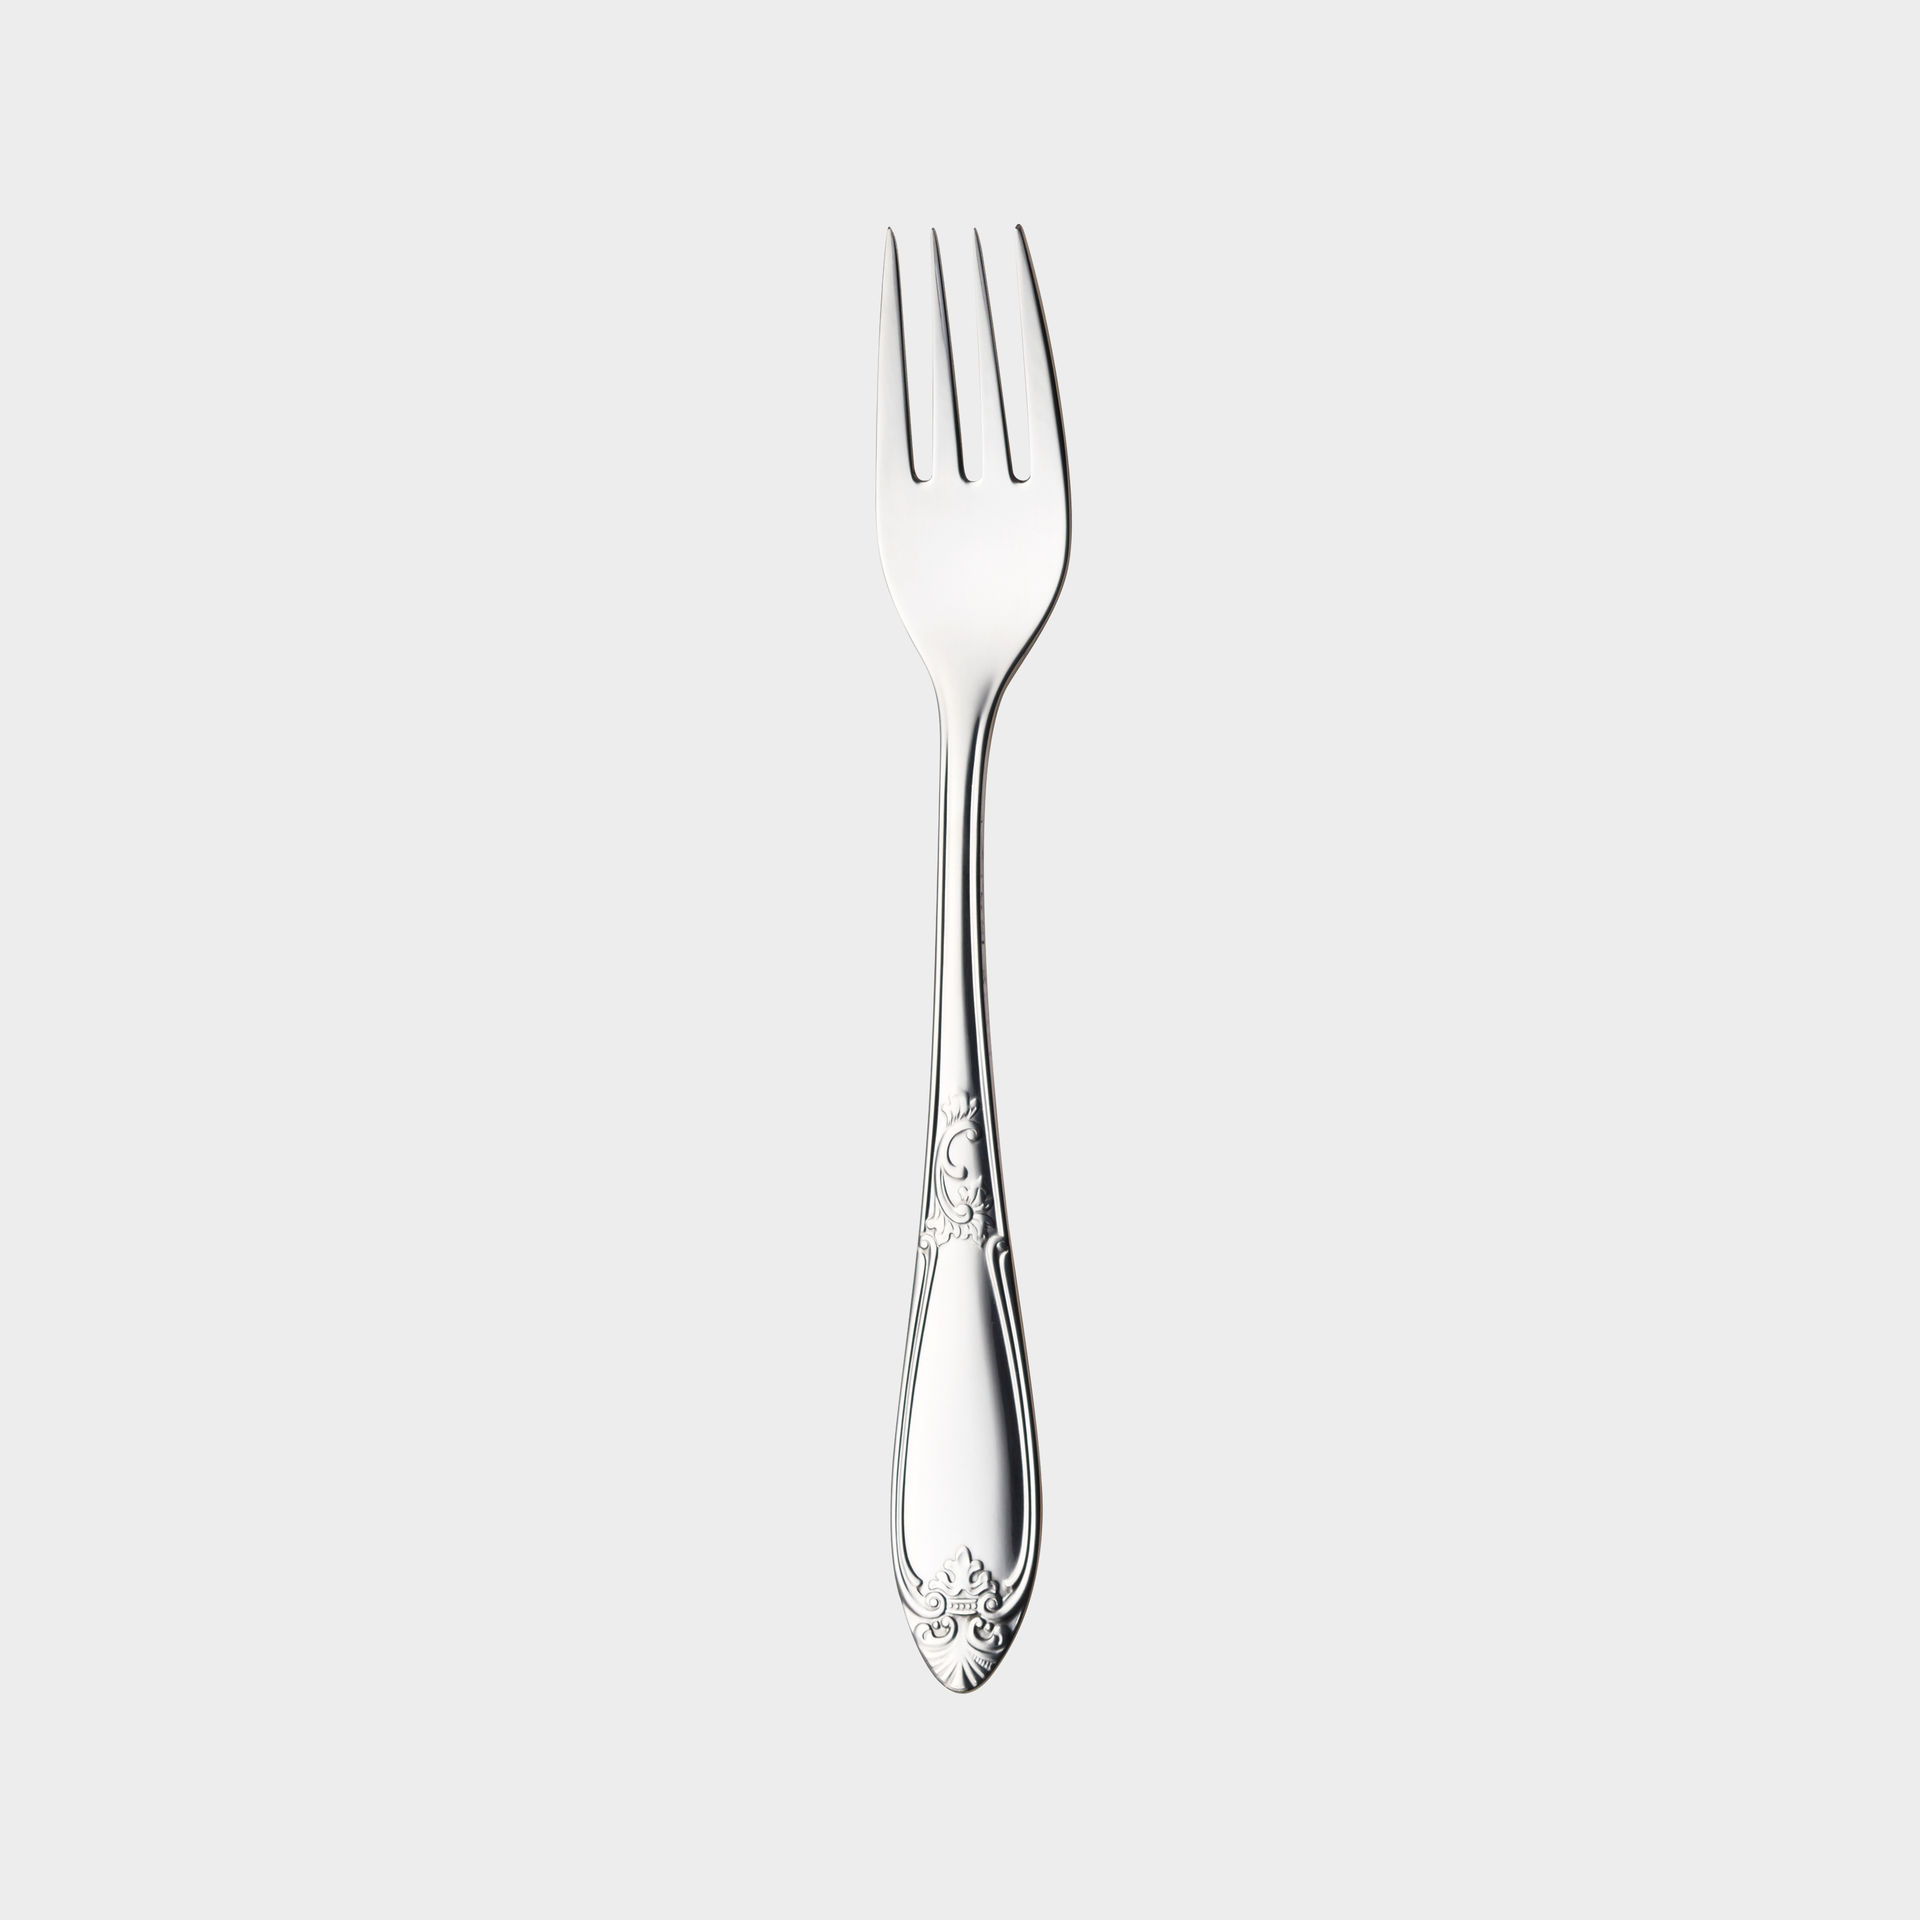 Nina dinner fork product image